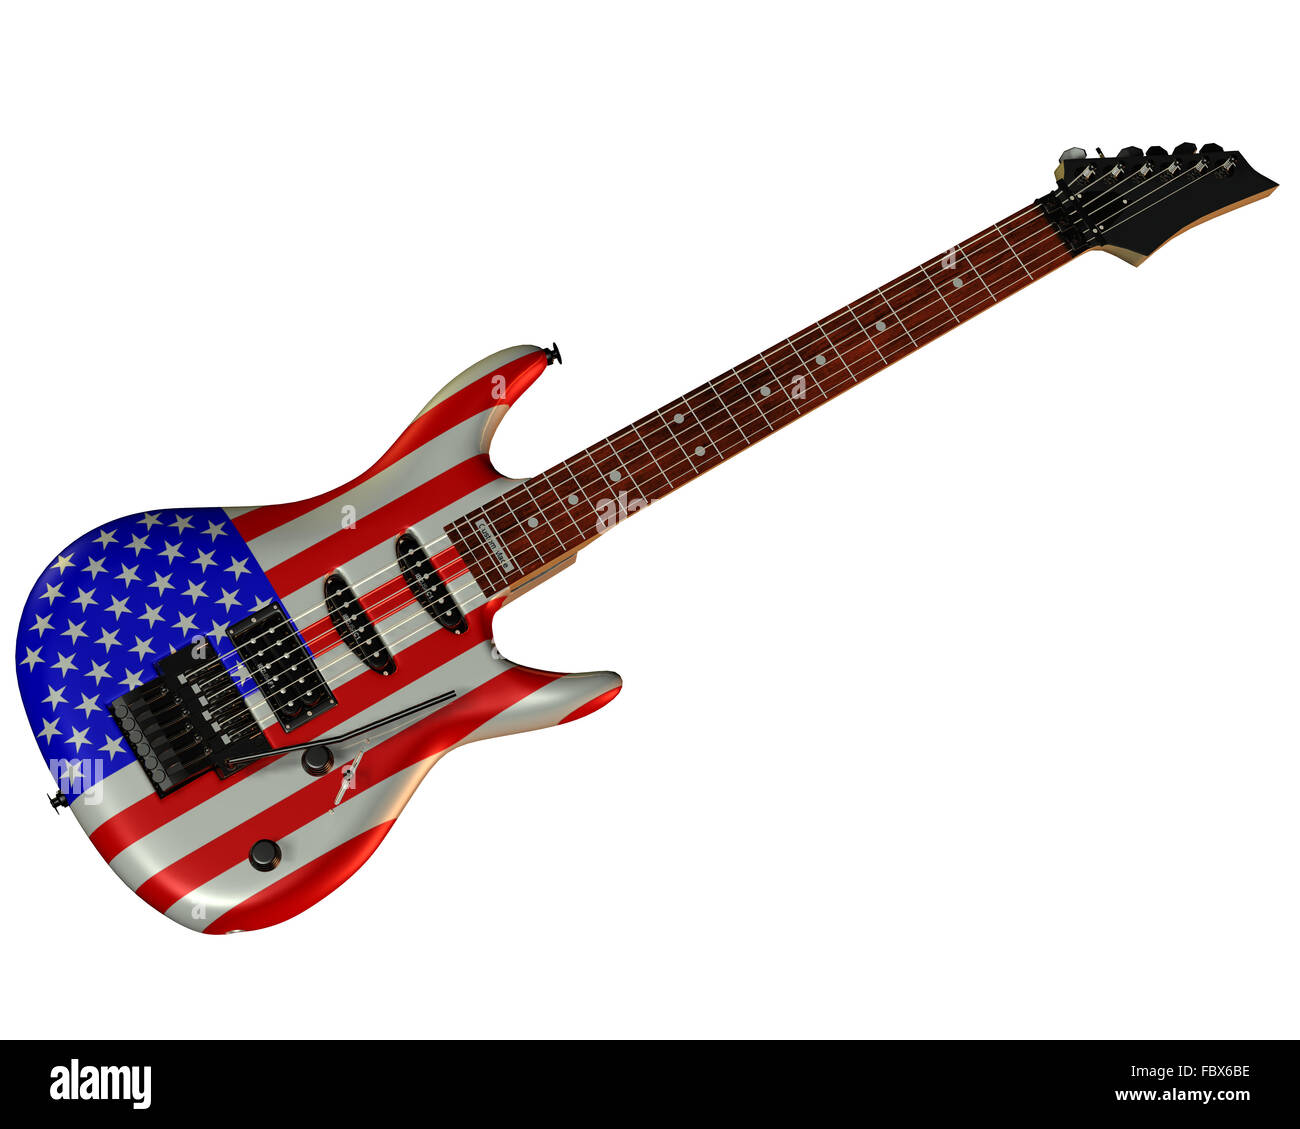 Electric Guitar with USA flag Stock Photo - Alamy